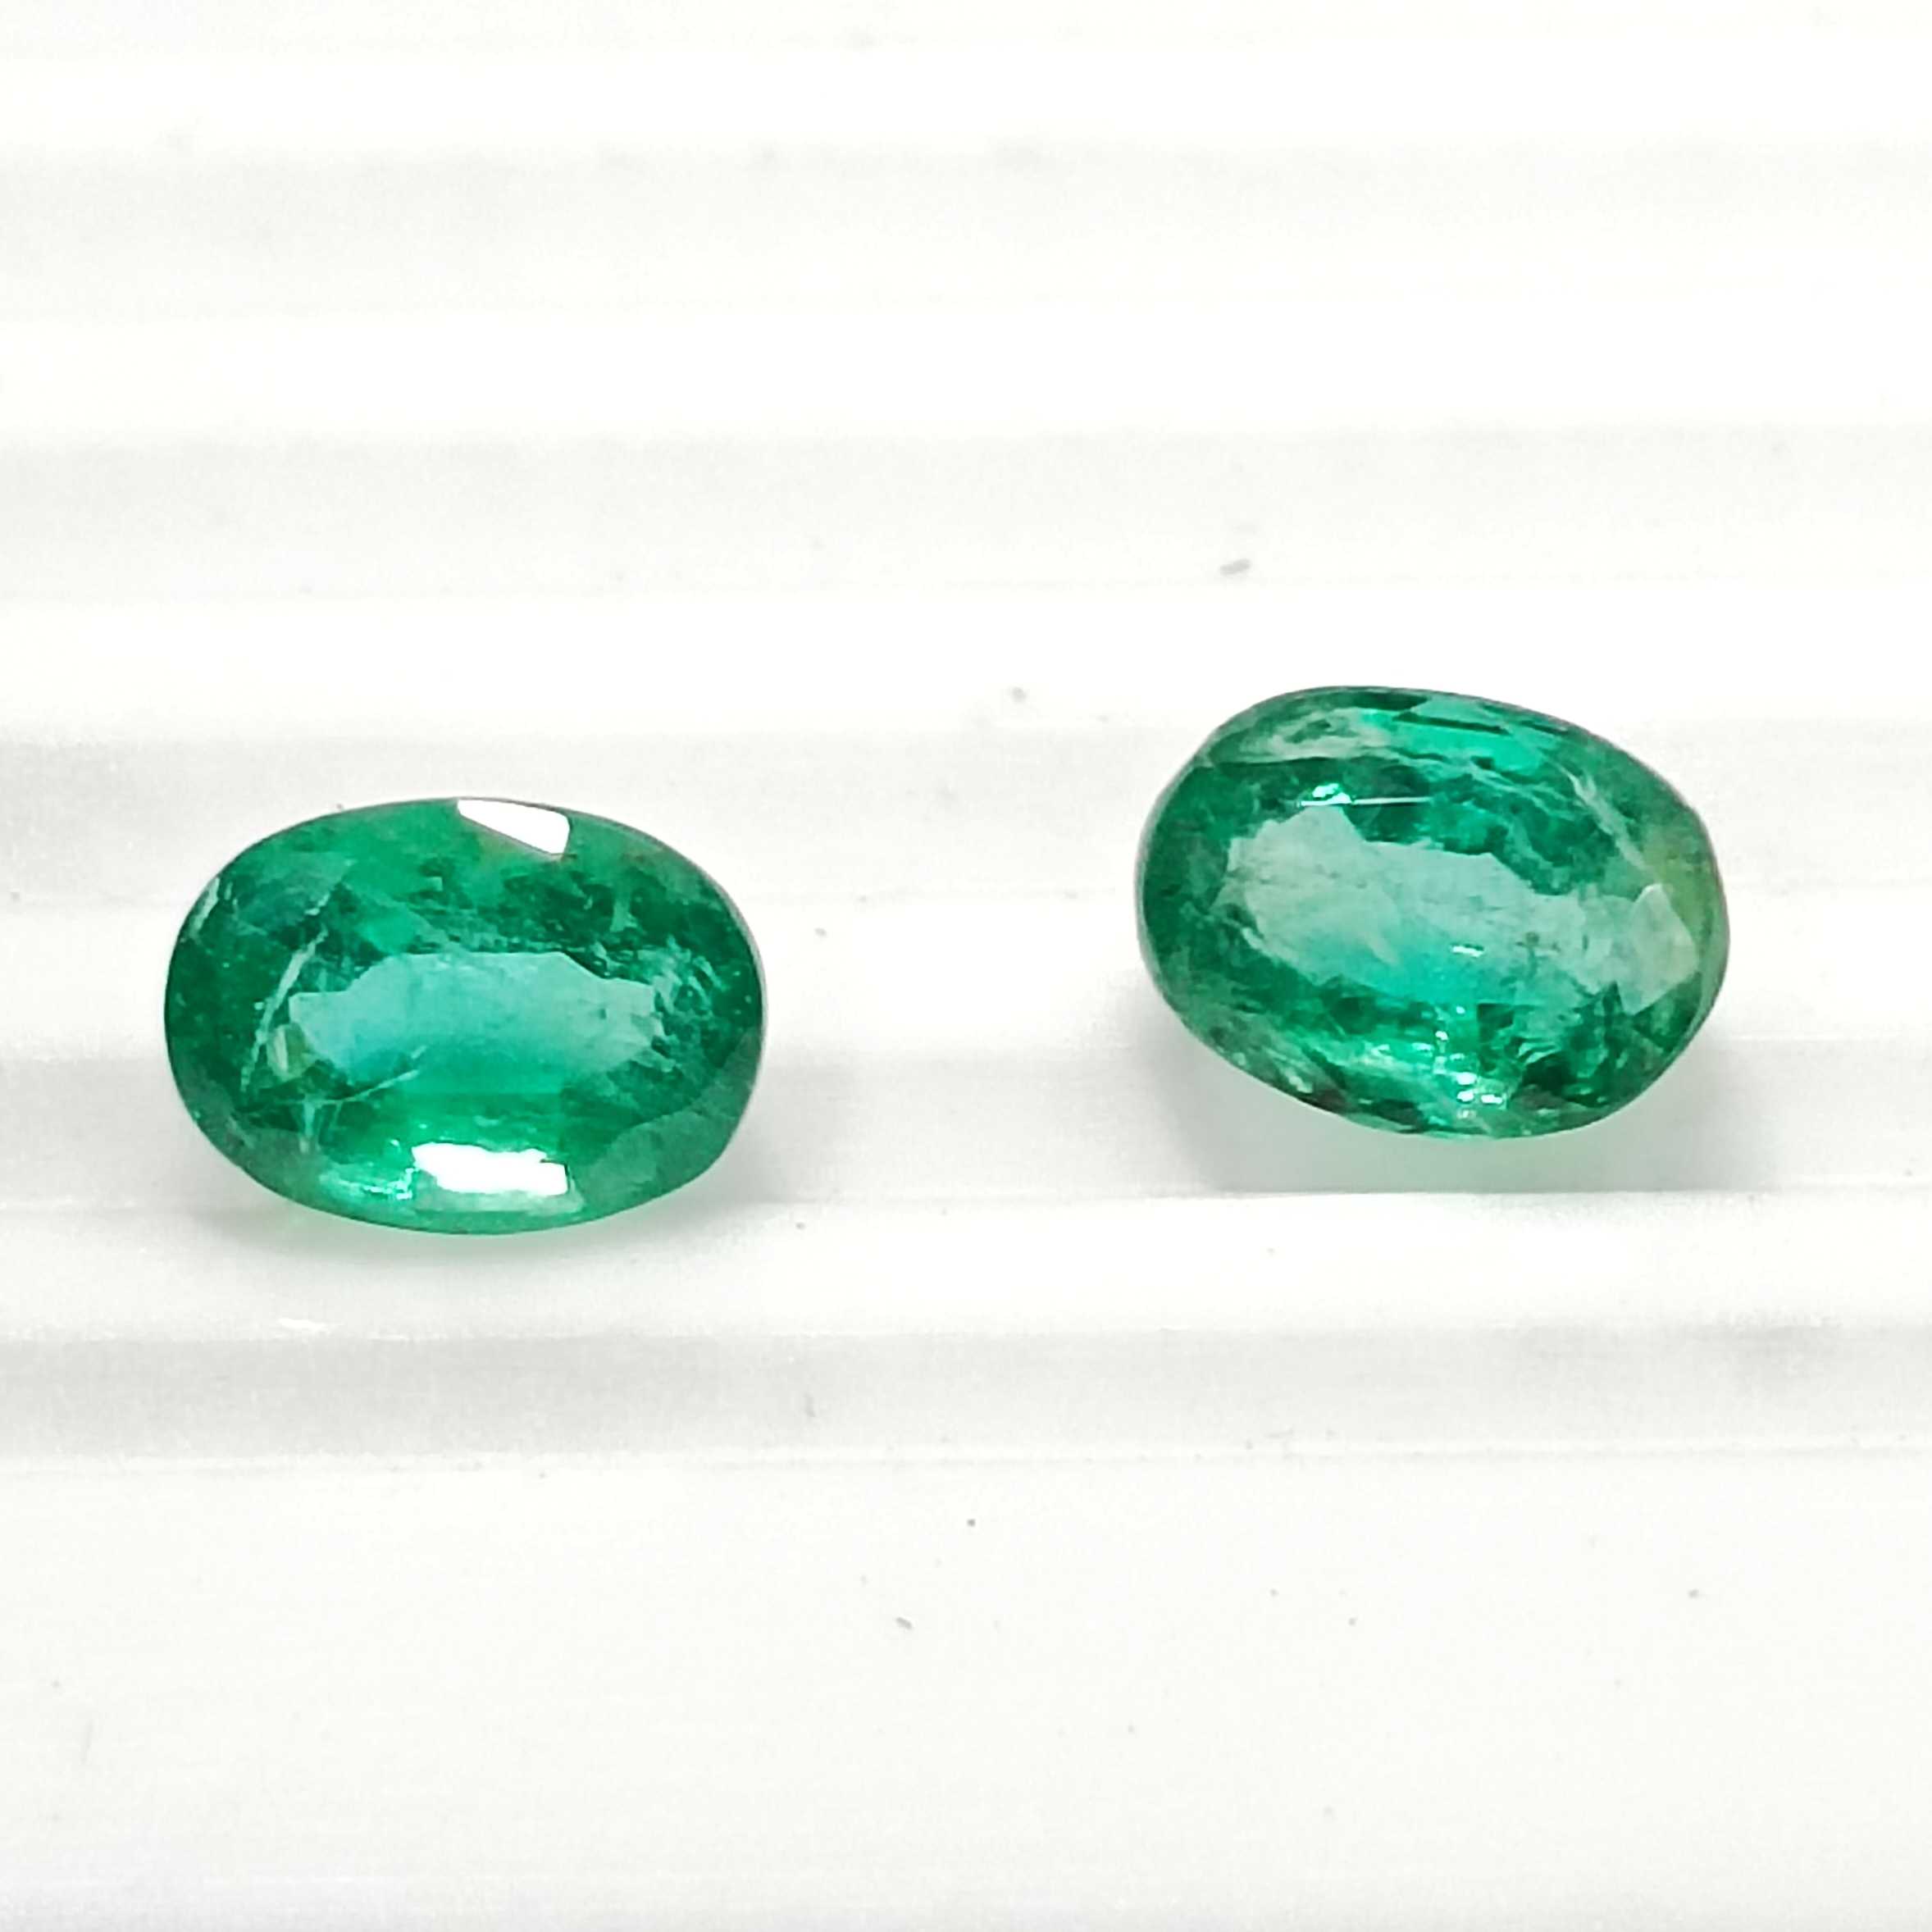 3.55ct vivid green oval mix cut emerald pair